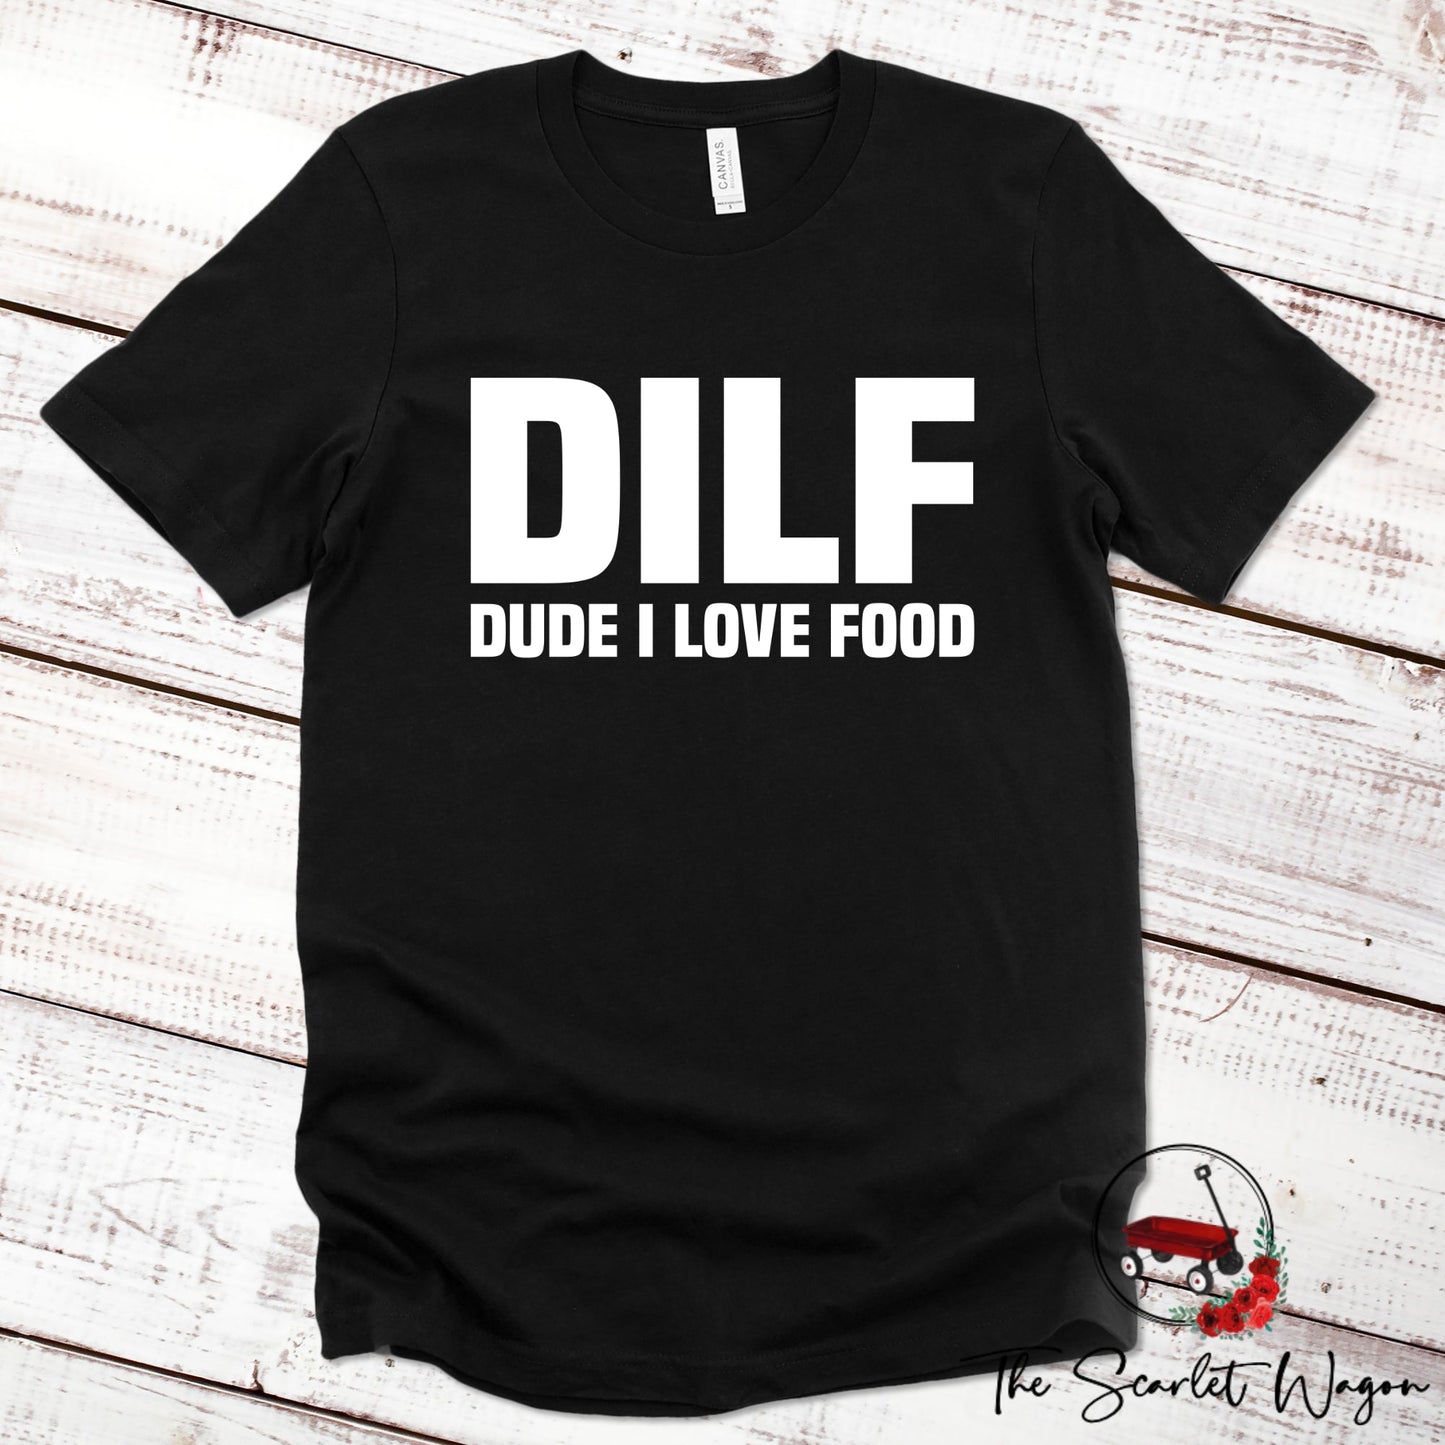 DILF - Dude I Love Food Premium Tee Scarlet Wagon Black XS 